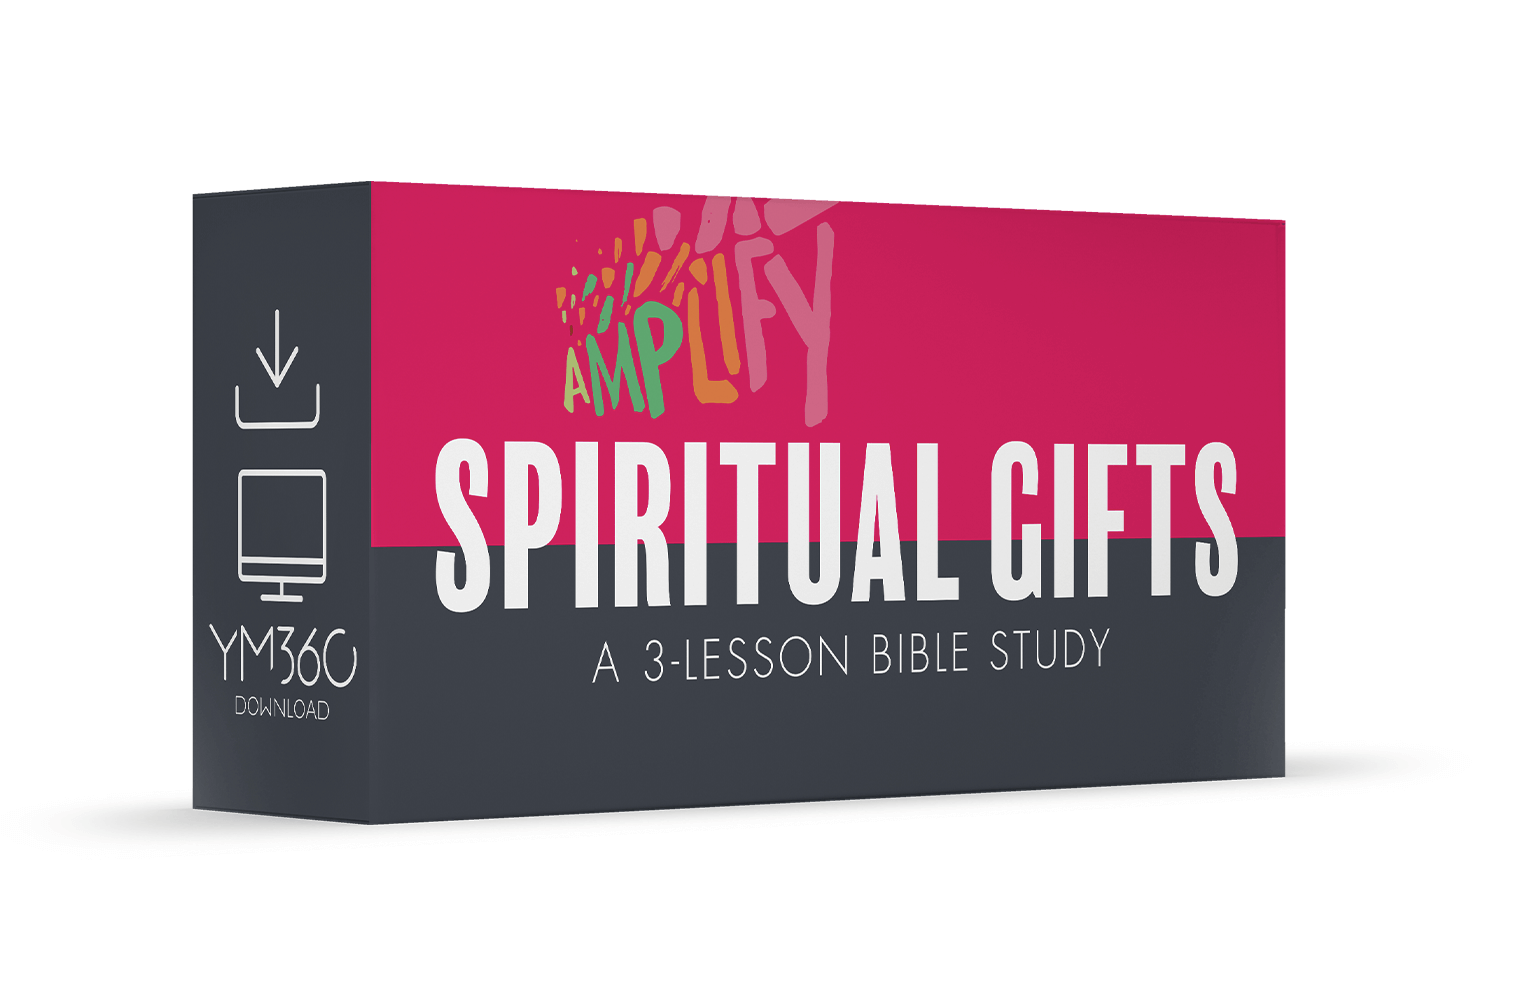 Spiritual Gifts: A 3-Lesson Bible Study